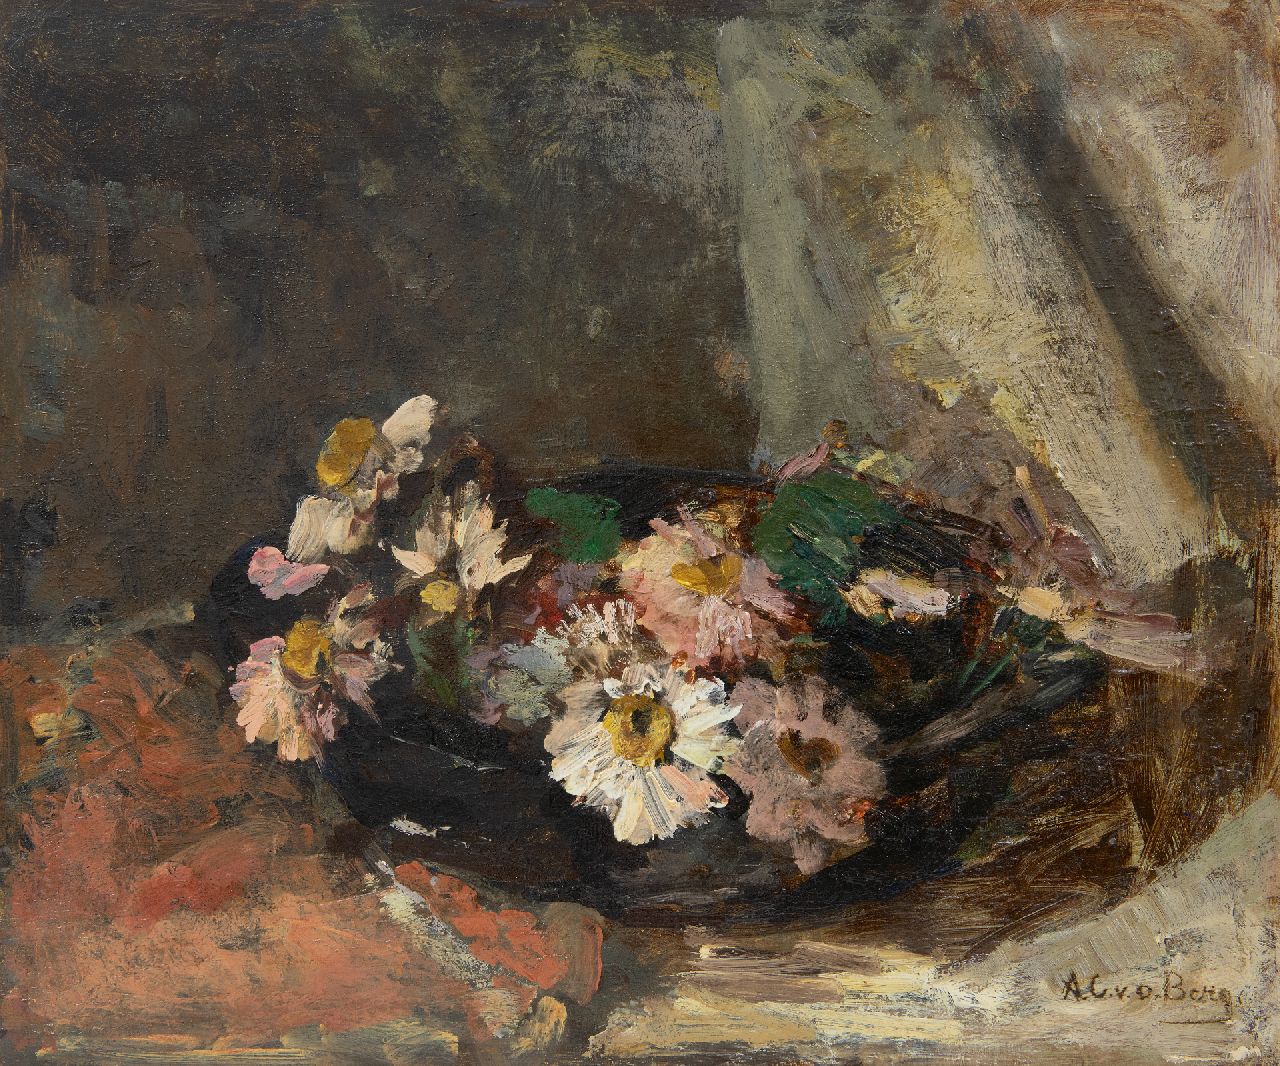 Berg A.C. van den | Anna Carolina 'Ans' van den Berg, Daysies in a bowl, oil on panel 35.0 x 41.1 cm, signed l.r.